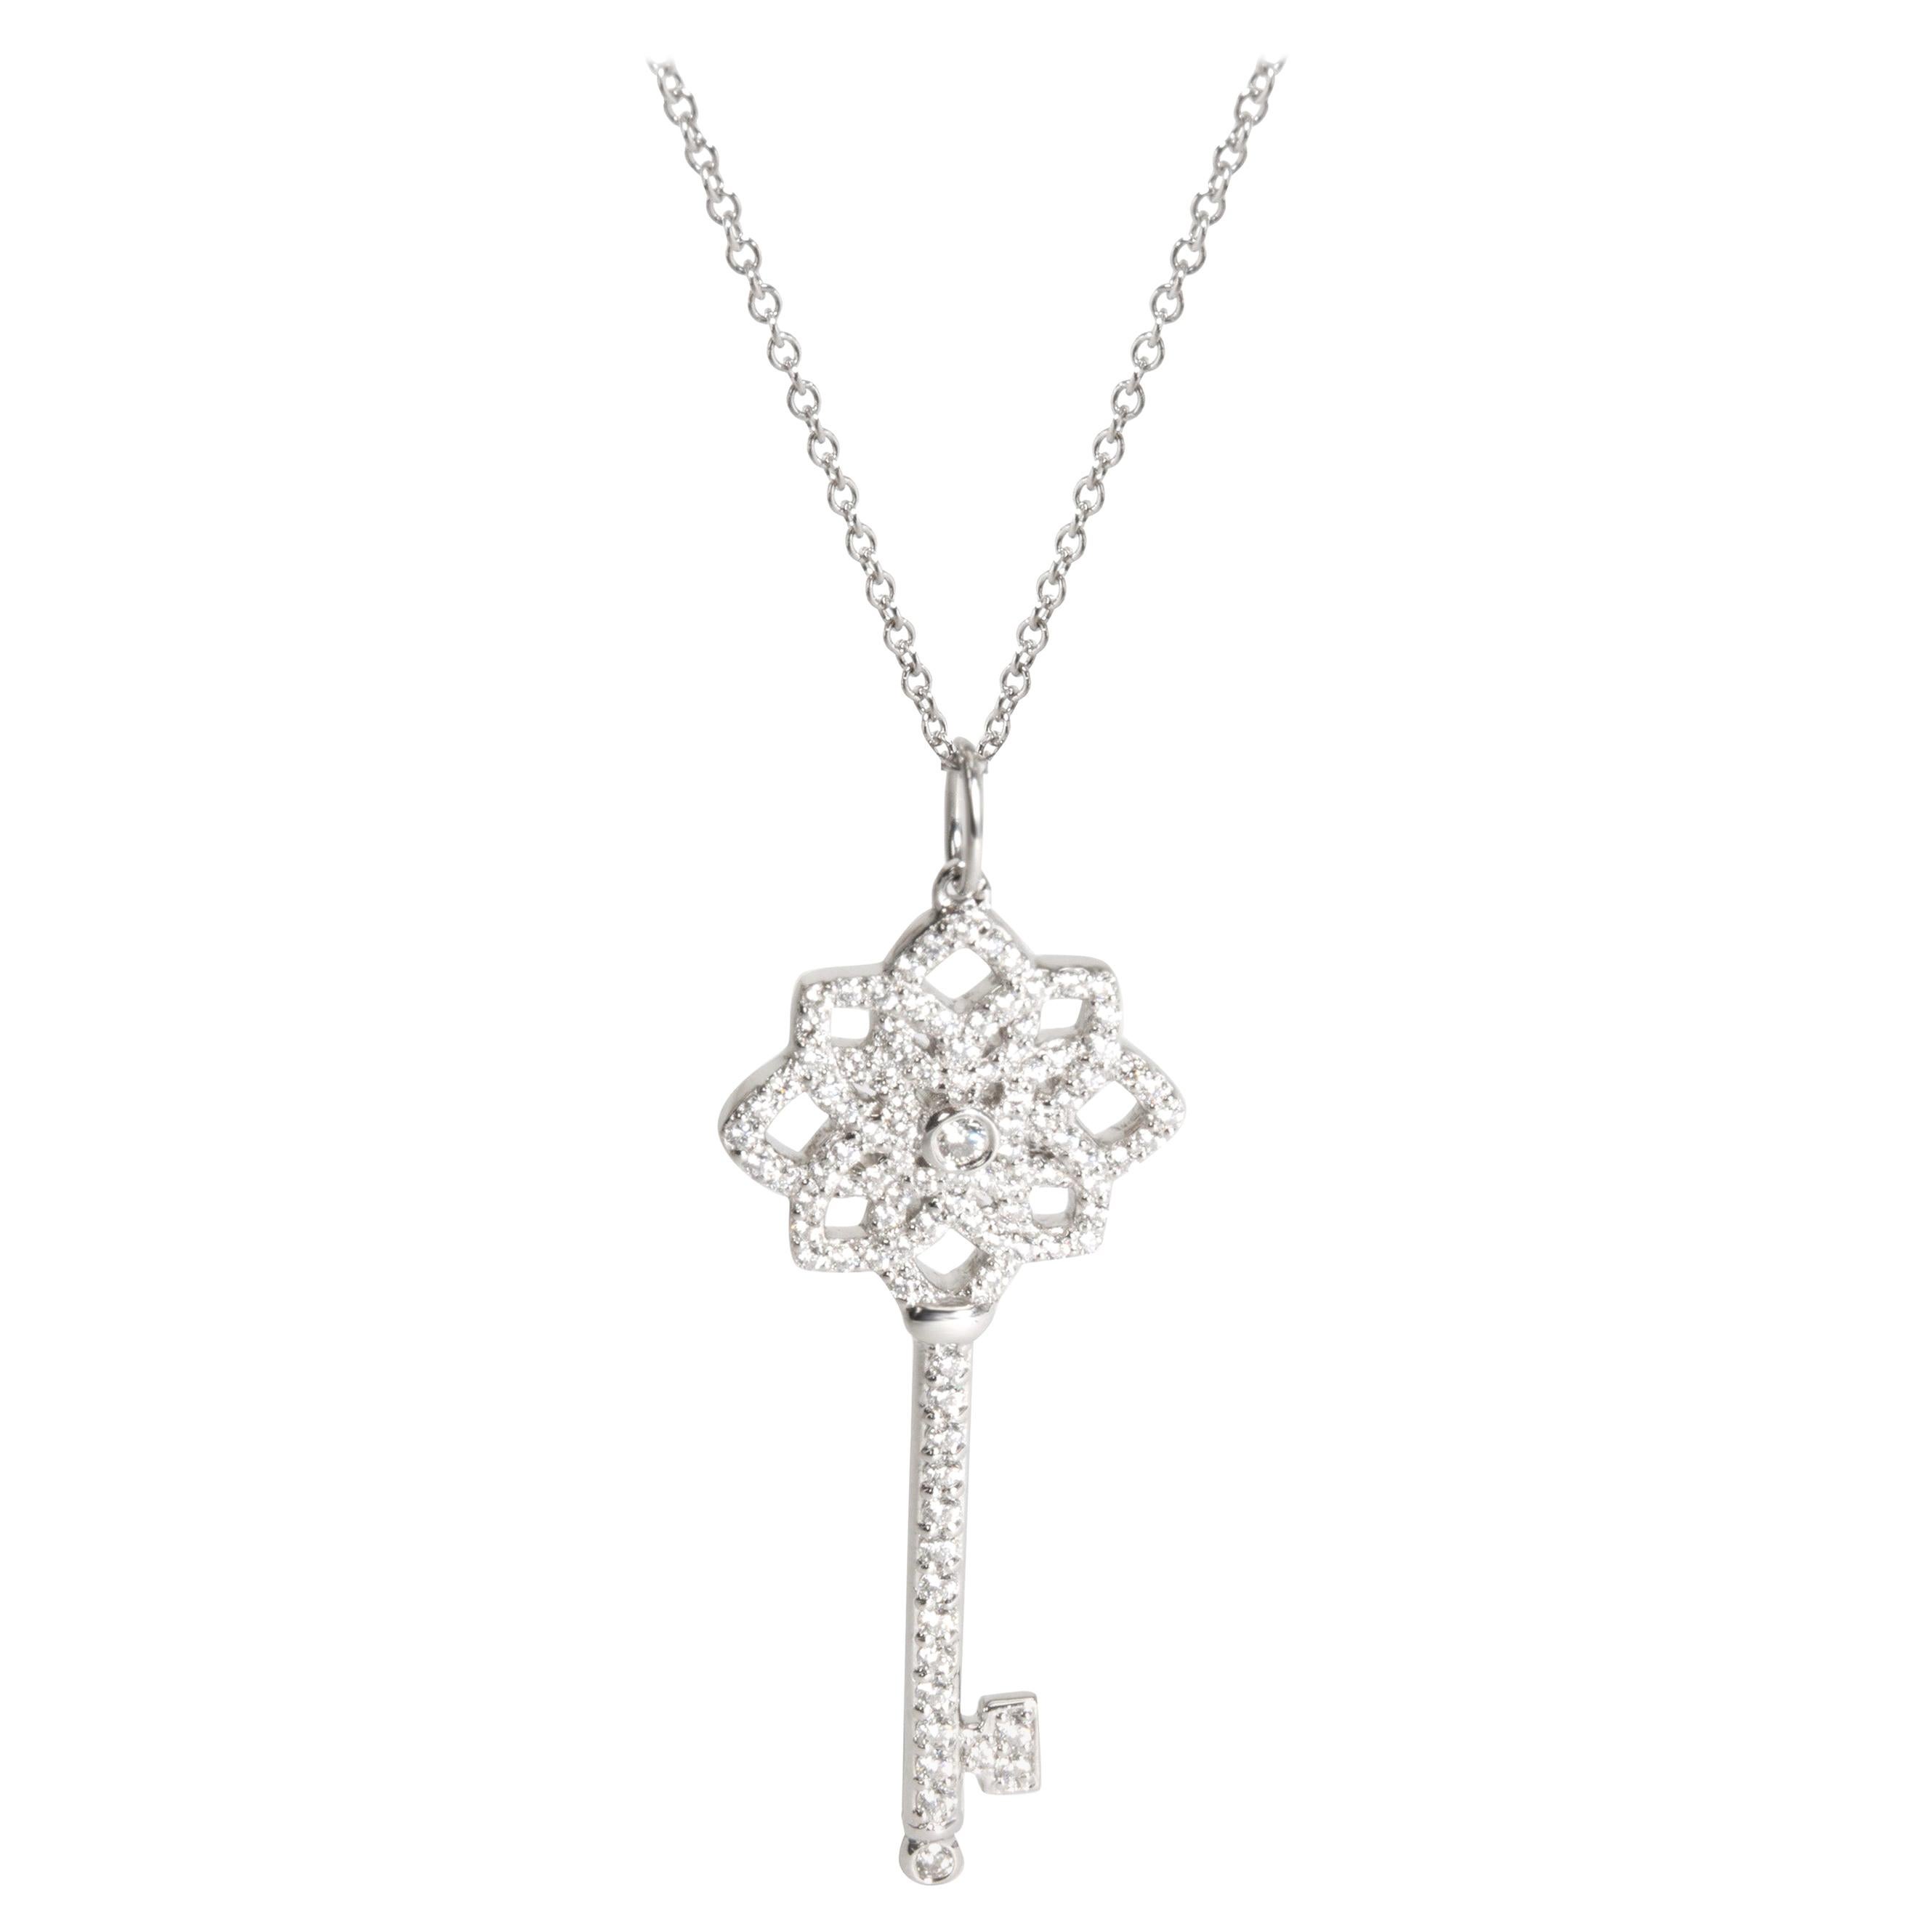 Tiffany & Co. Woven Key Diamond Pendant in Platinum 0.37 Carat